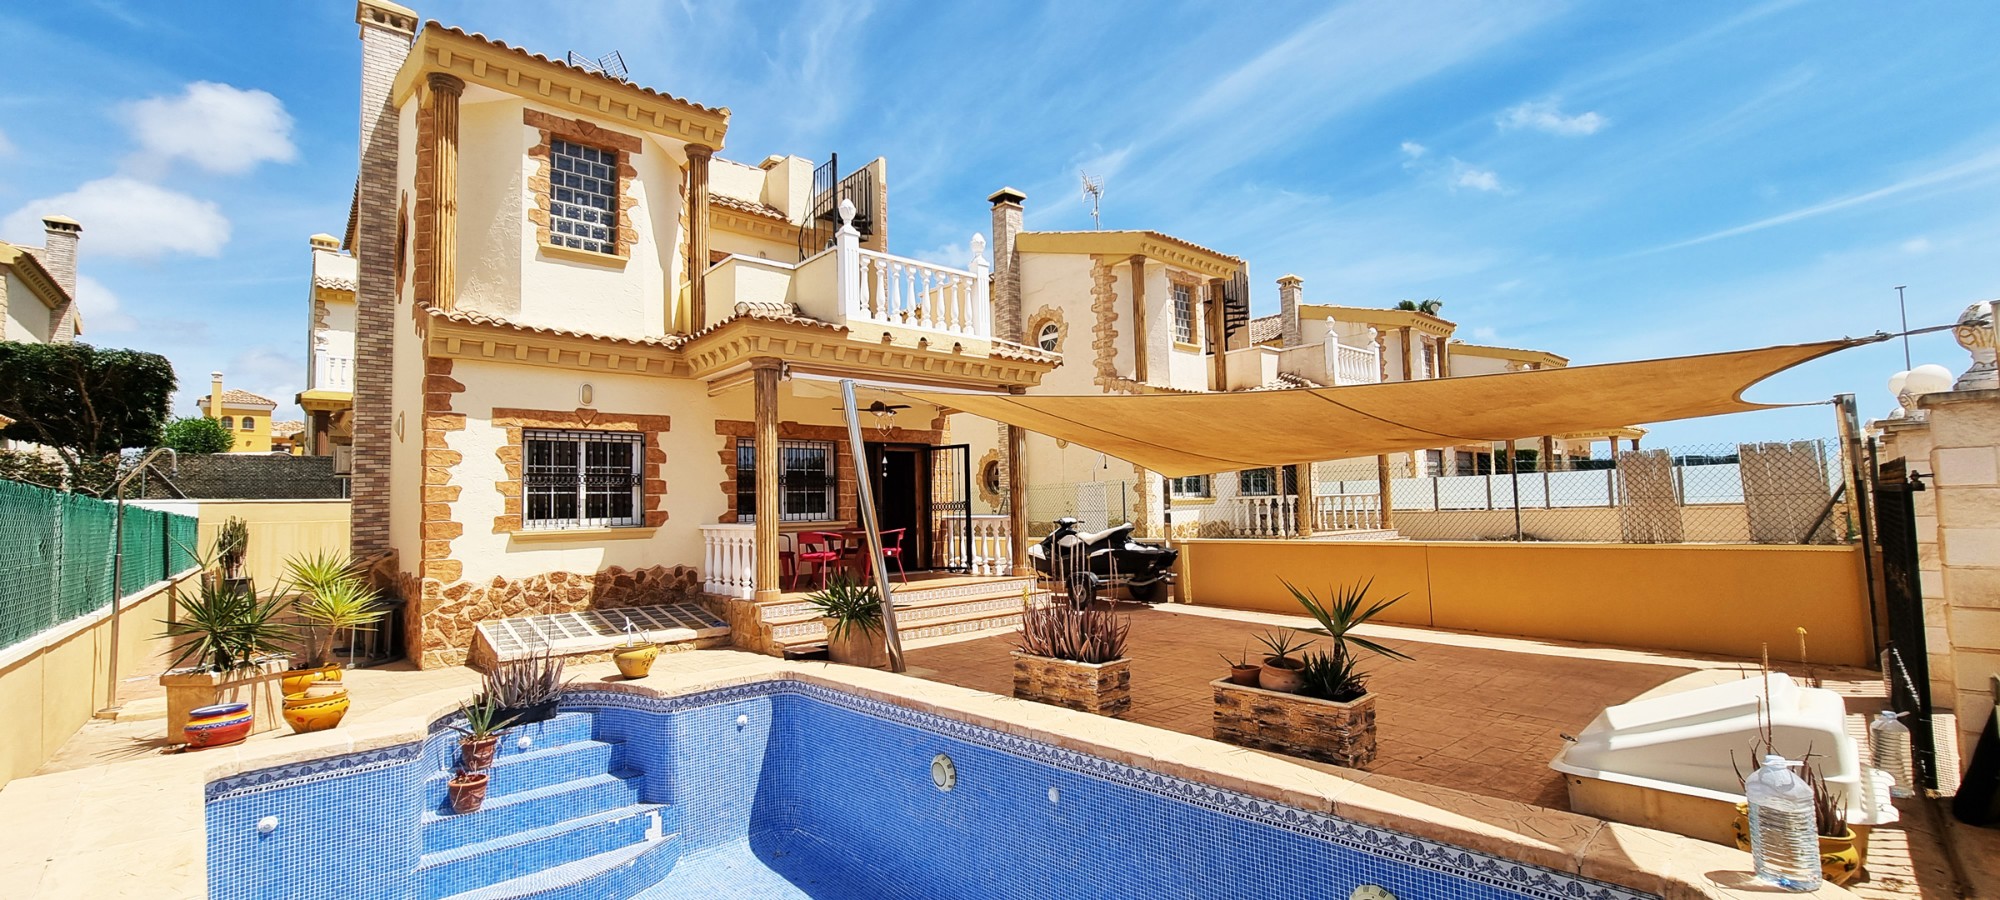 For sale: 3 bedroom house / villa in Guardamar del Segura, Costa Blanca